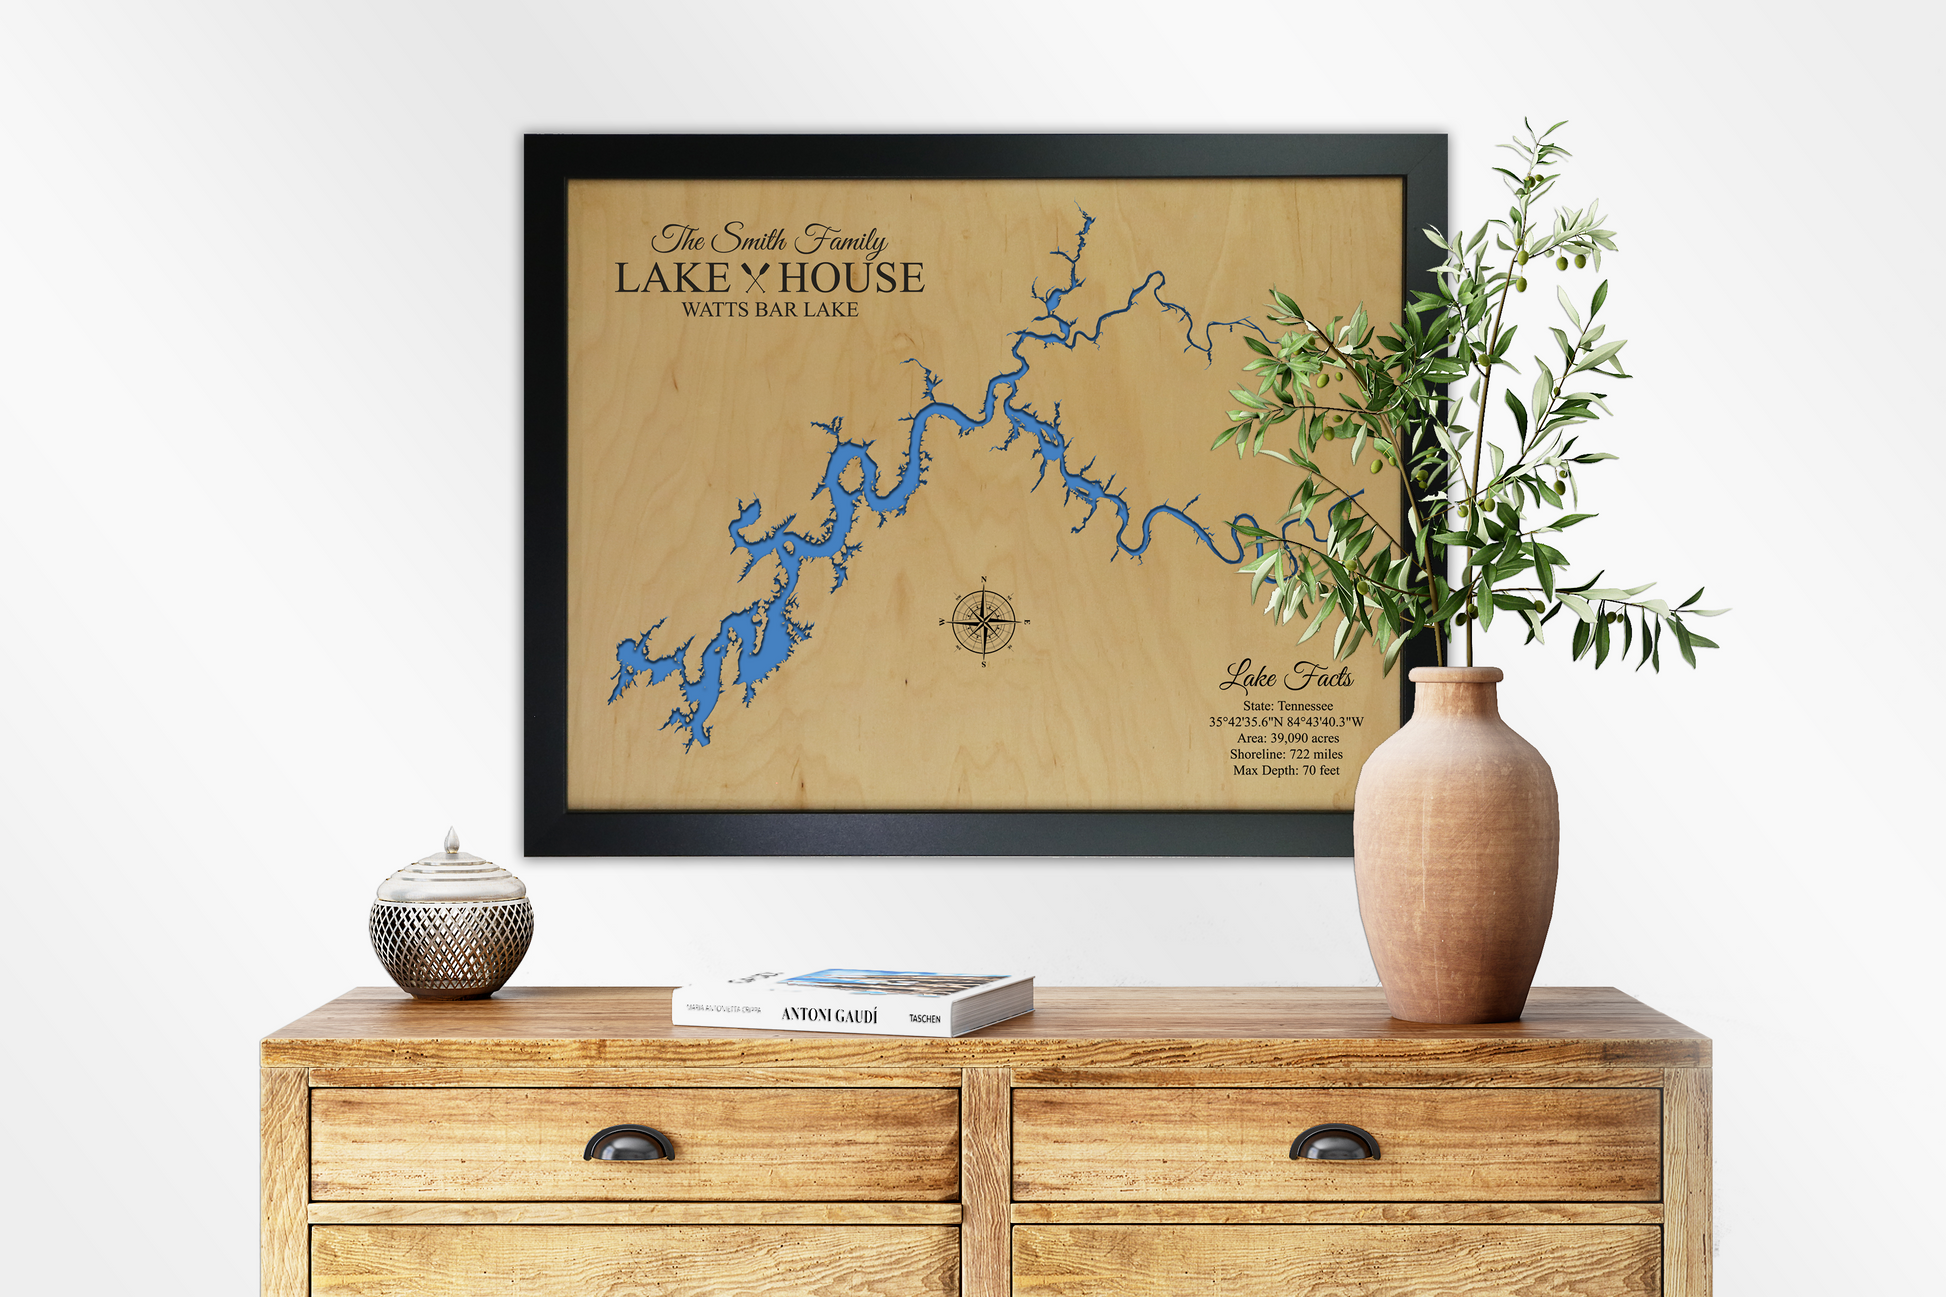 Watts Bar Lake, Tennessee - Notting Hill Designs - Custom Wood Maps